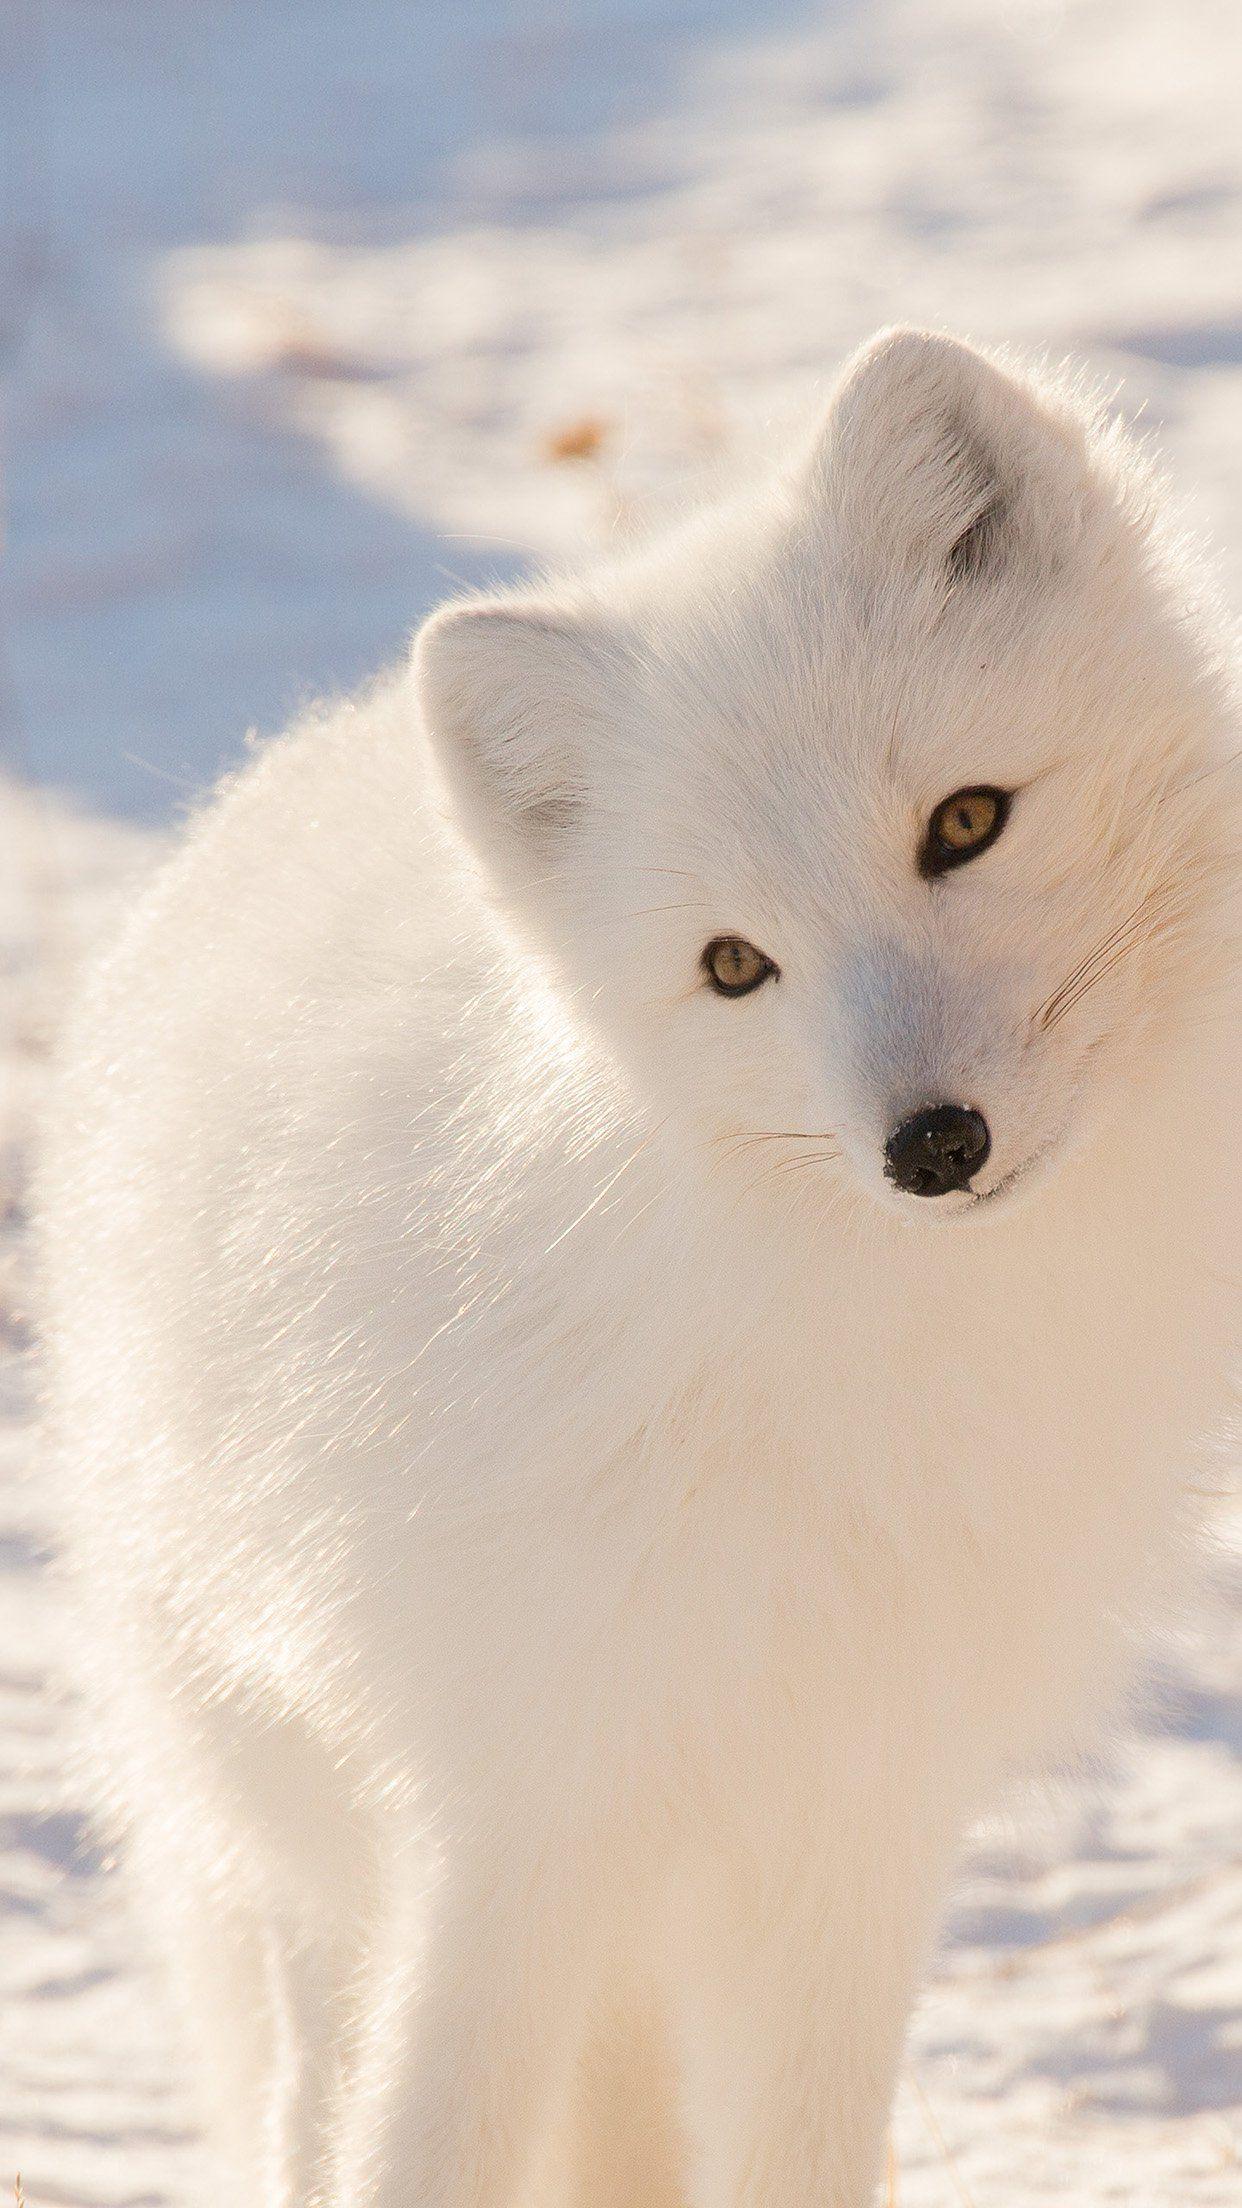 iPhone X wallpaper. winter animal fox white